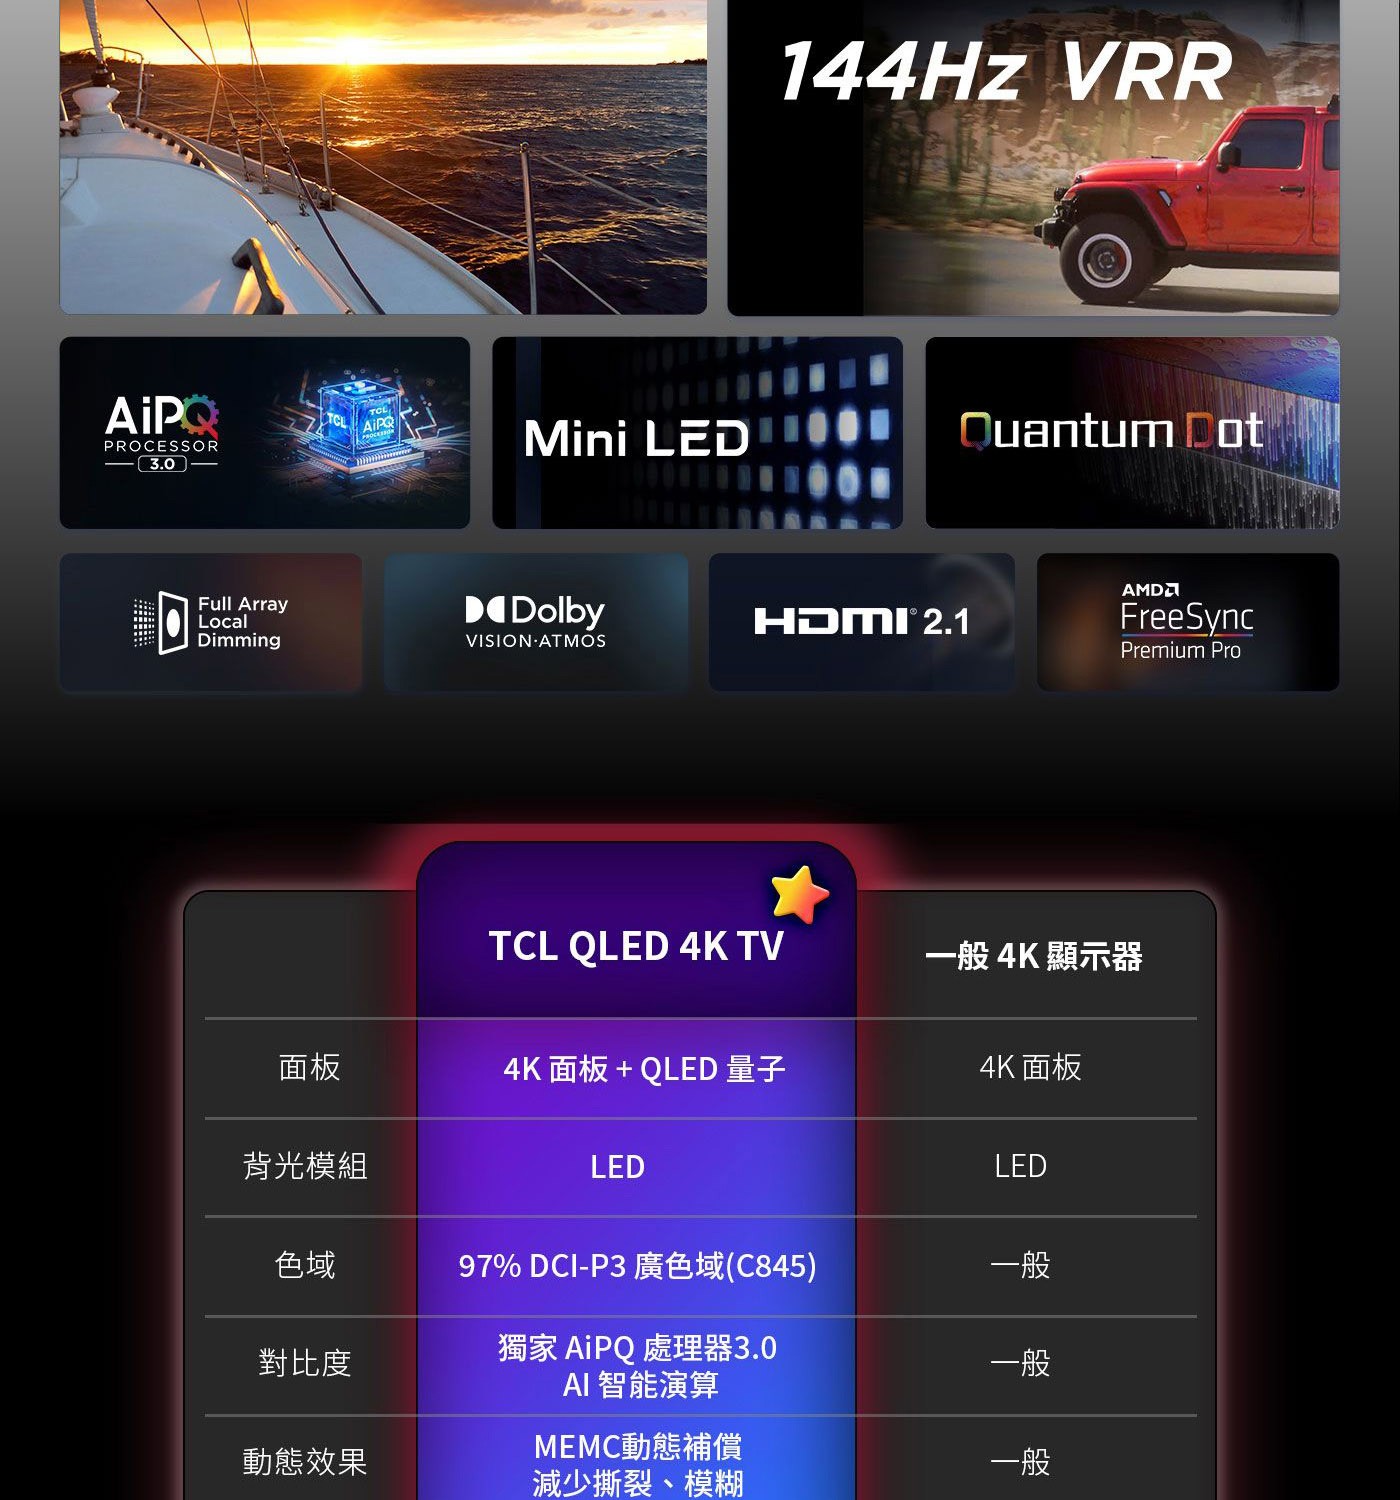 TCL 75吋 4K Mini LED QLED Google TV 量子智能連網液晶顯示器 75C845 HDR 2000 nits璀璨亮度 驚艷奪目